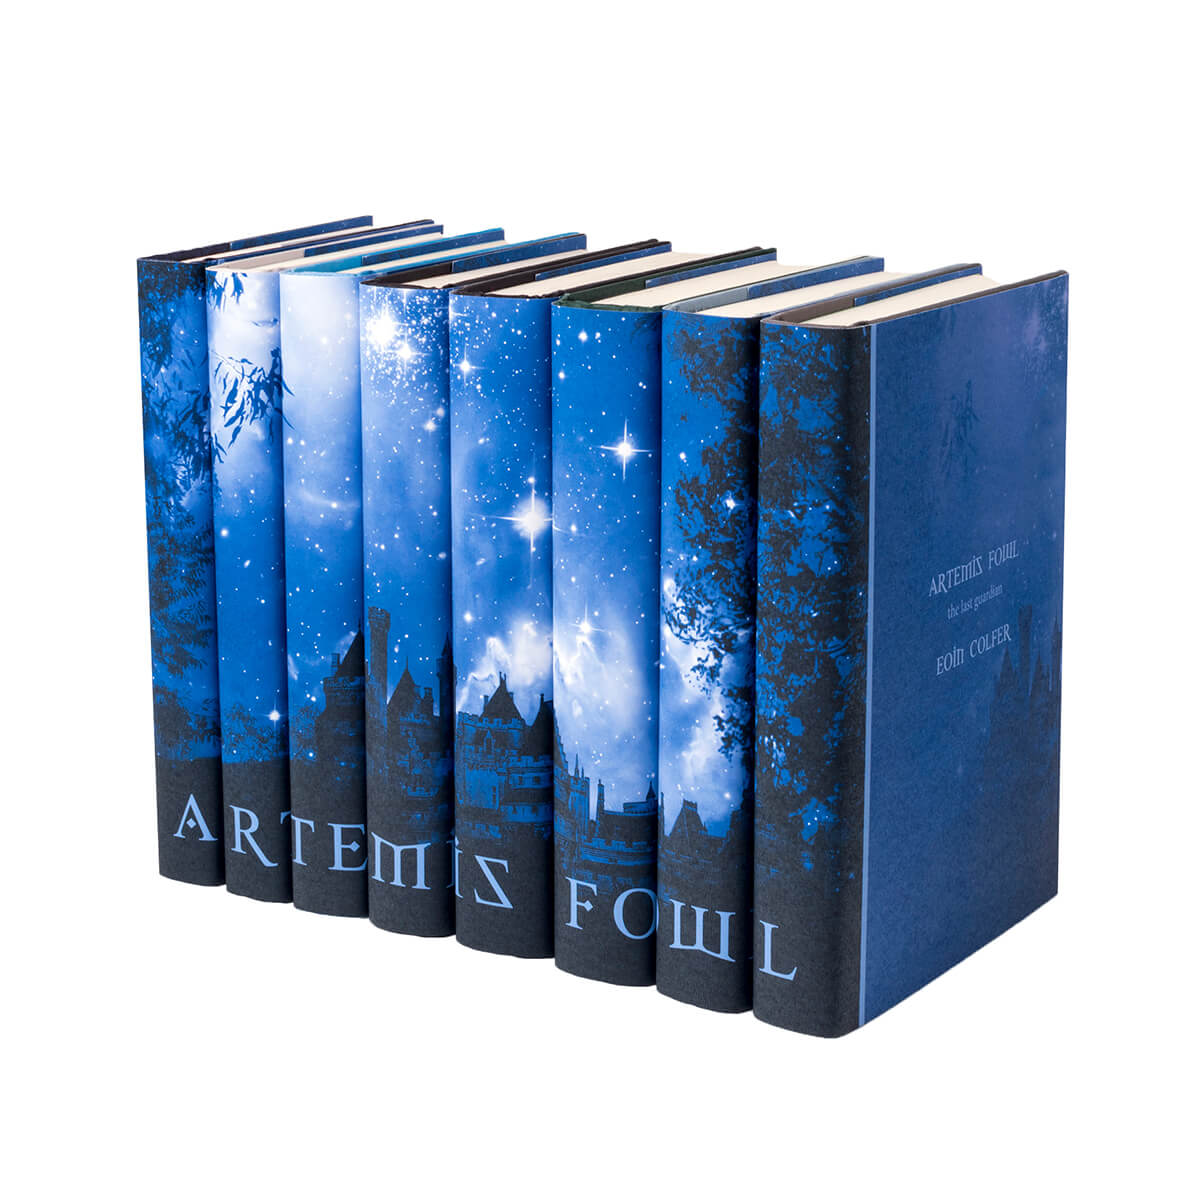 Artemis Fowl by Eoin Colfer - Artemis Fowl - Artemis Fowl, Disney Books